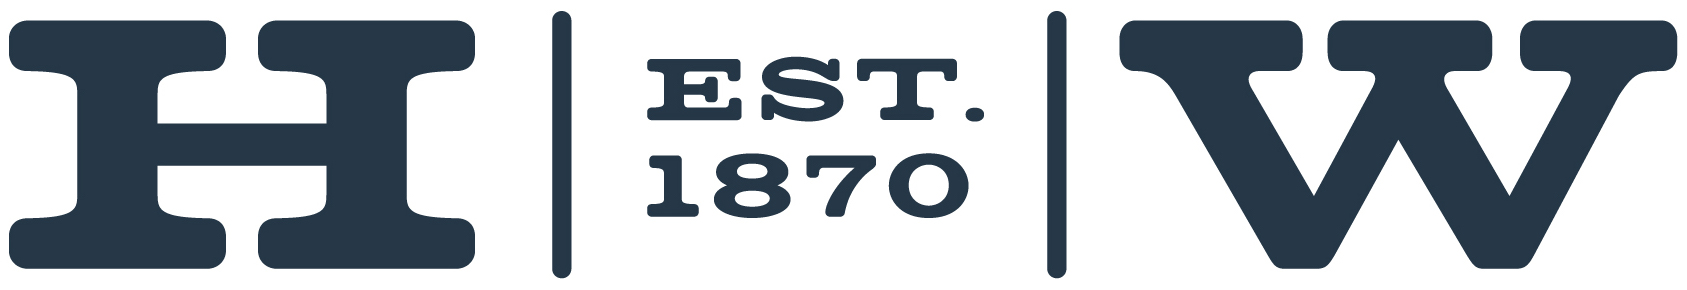 Historic Westminster logo